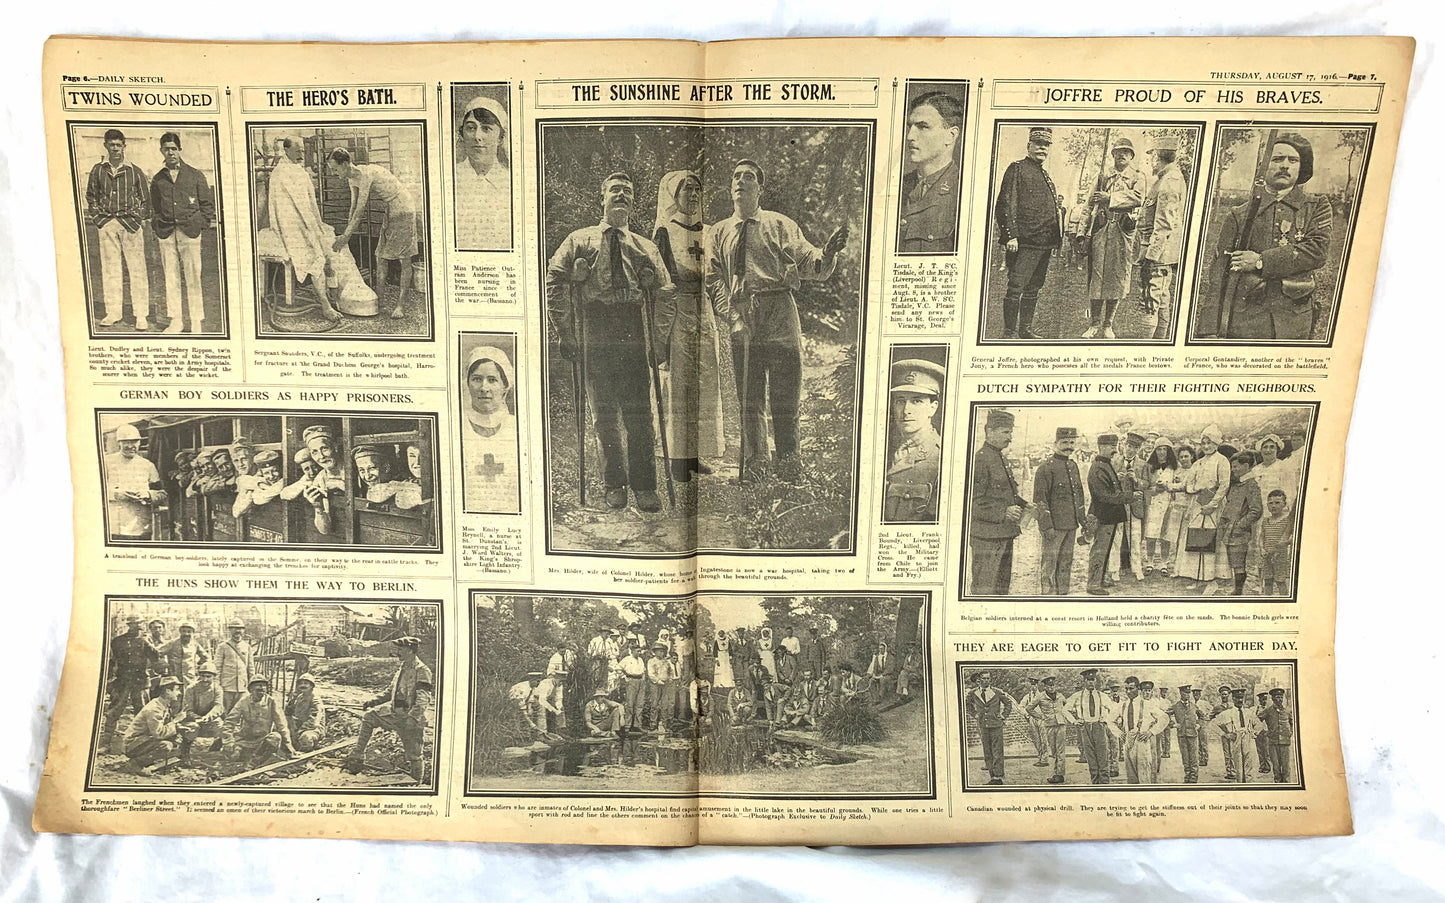 WW1 Daily Sketch Original Newspaper dated August 17th 1916